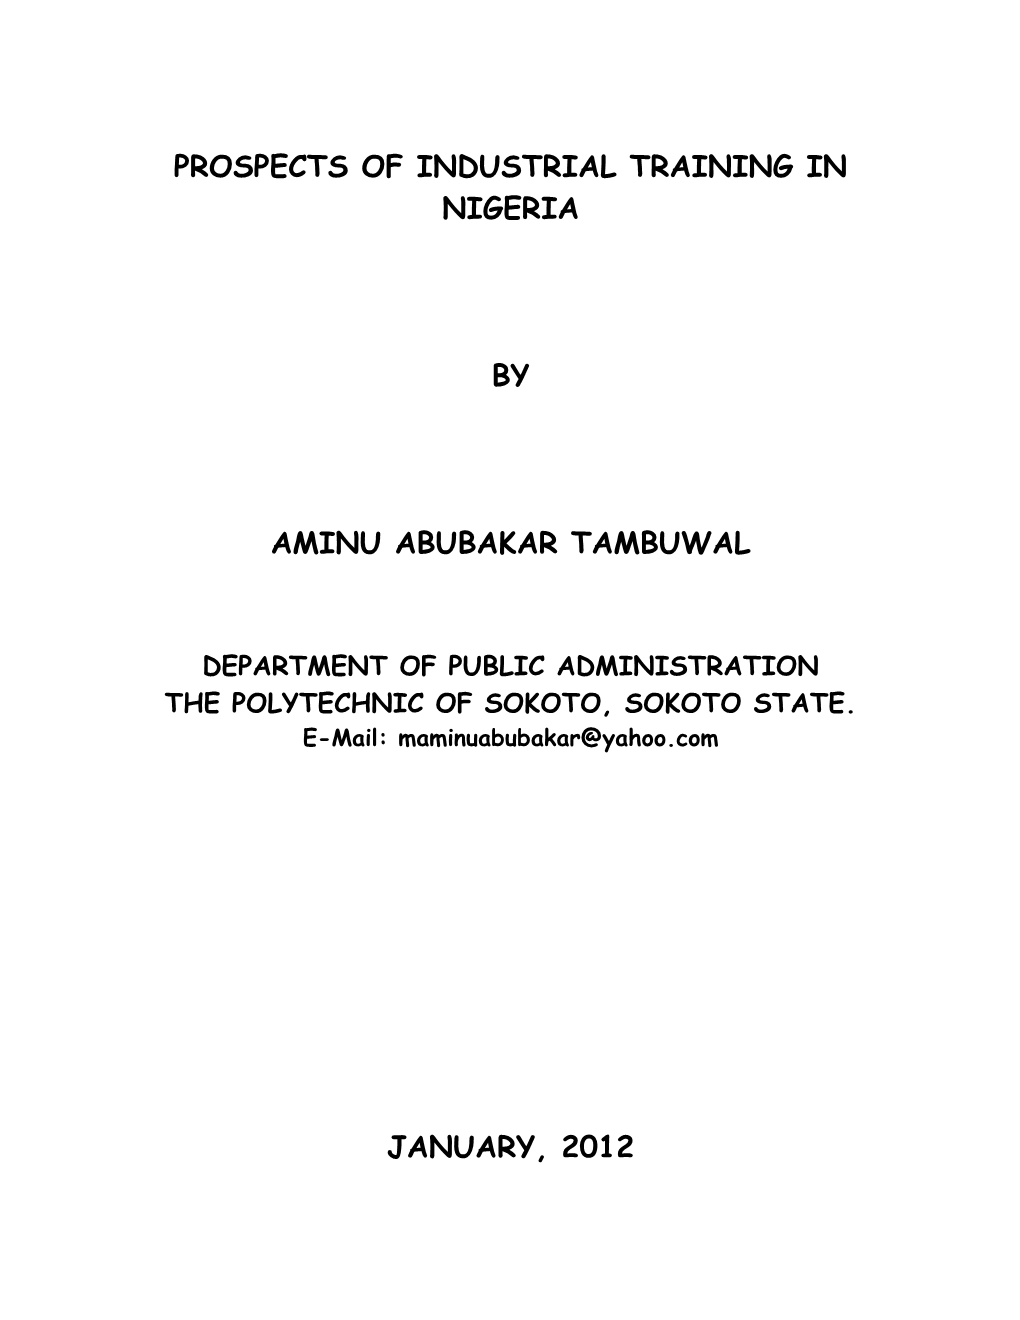 Prospect of Industrial Training in Nigeria